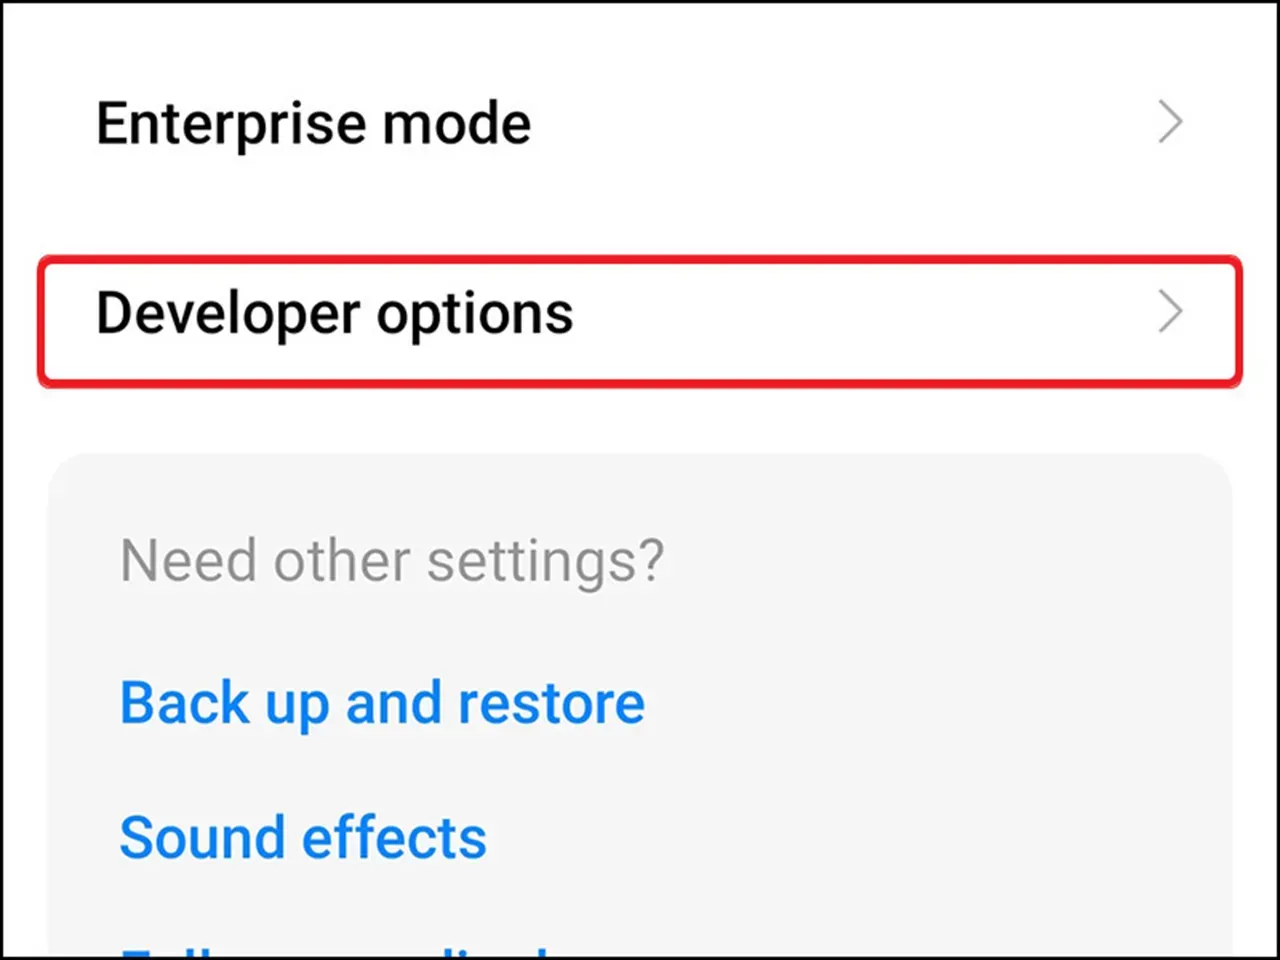 Chọn Developer options